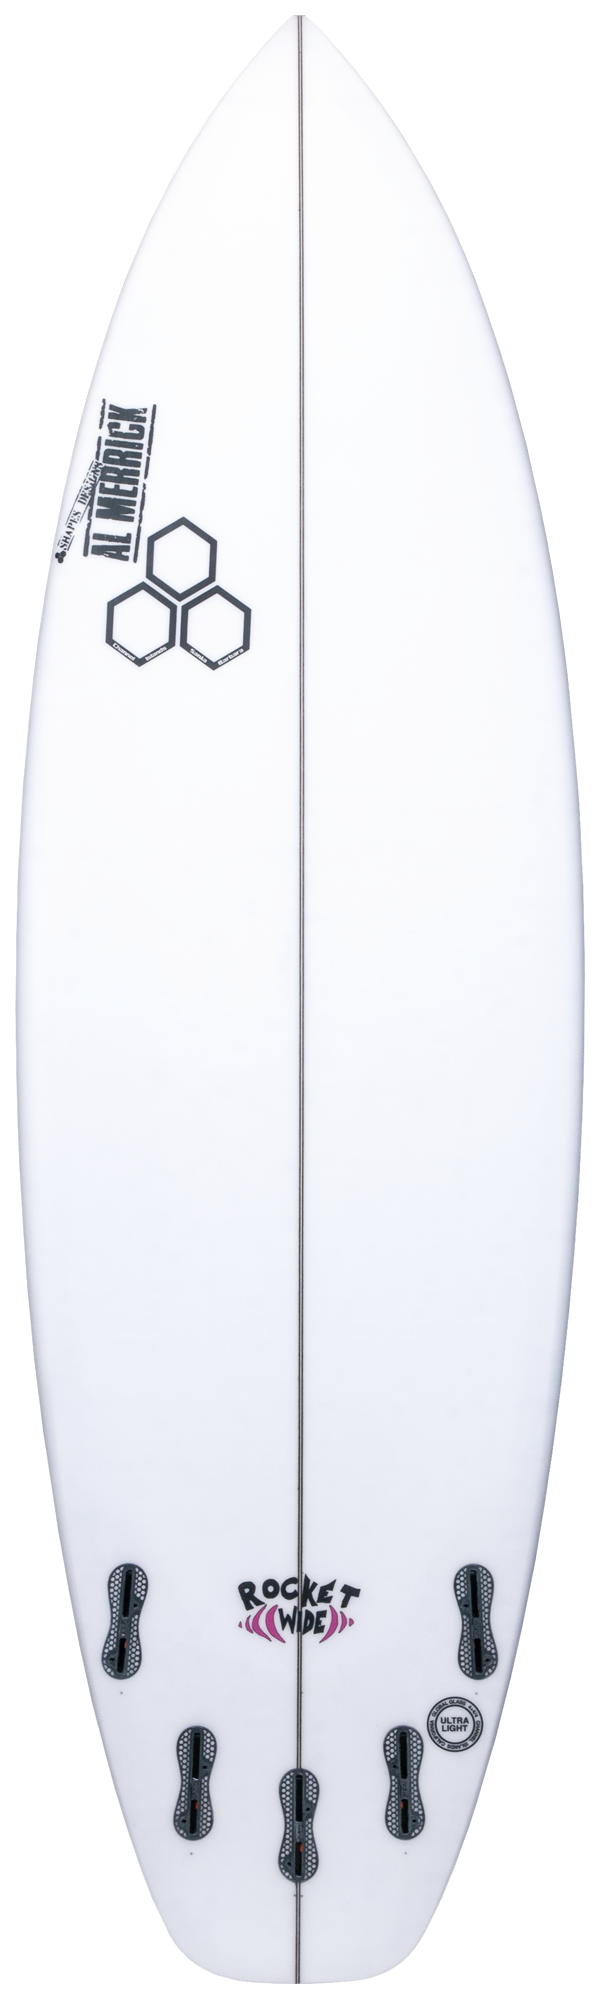 Rocket Wide Squash – Channel Islands Surfboards